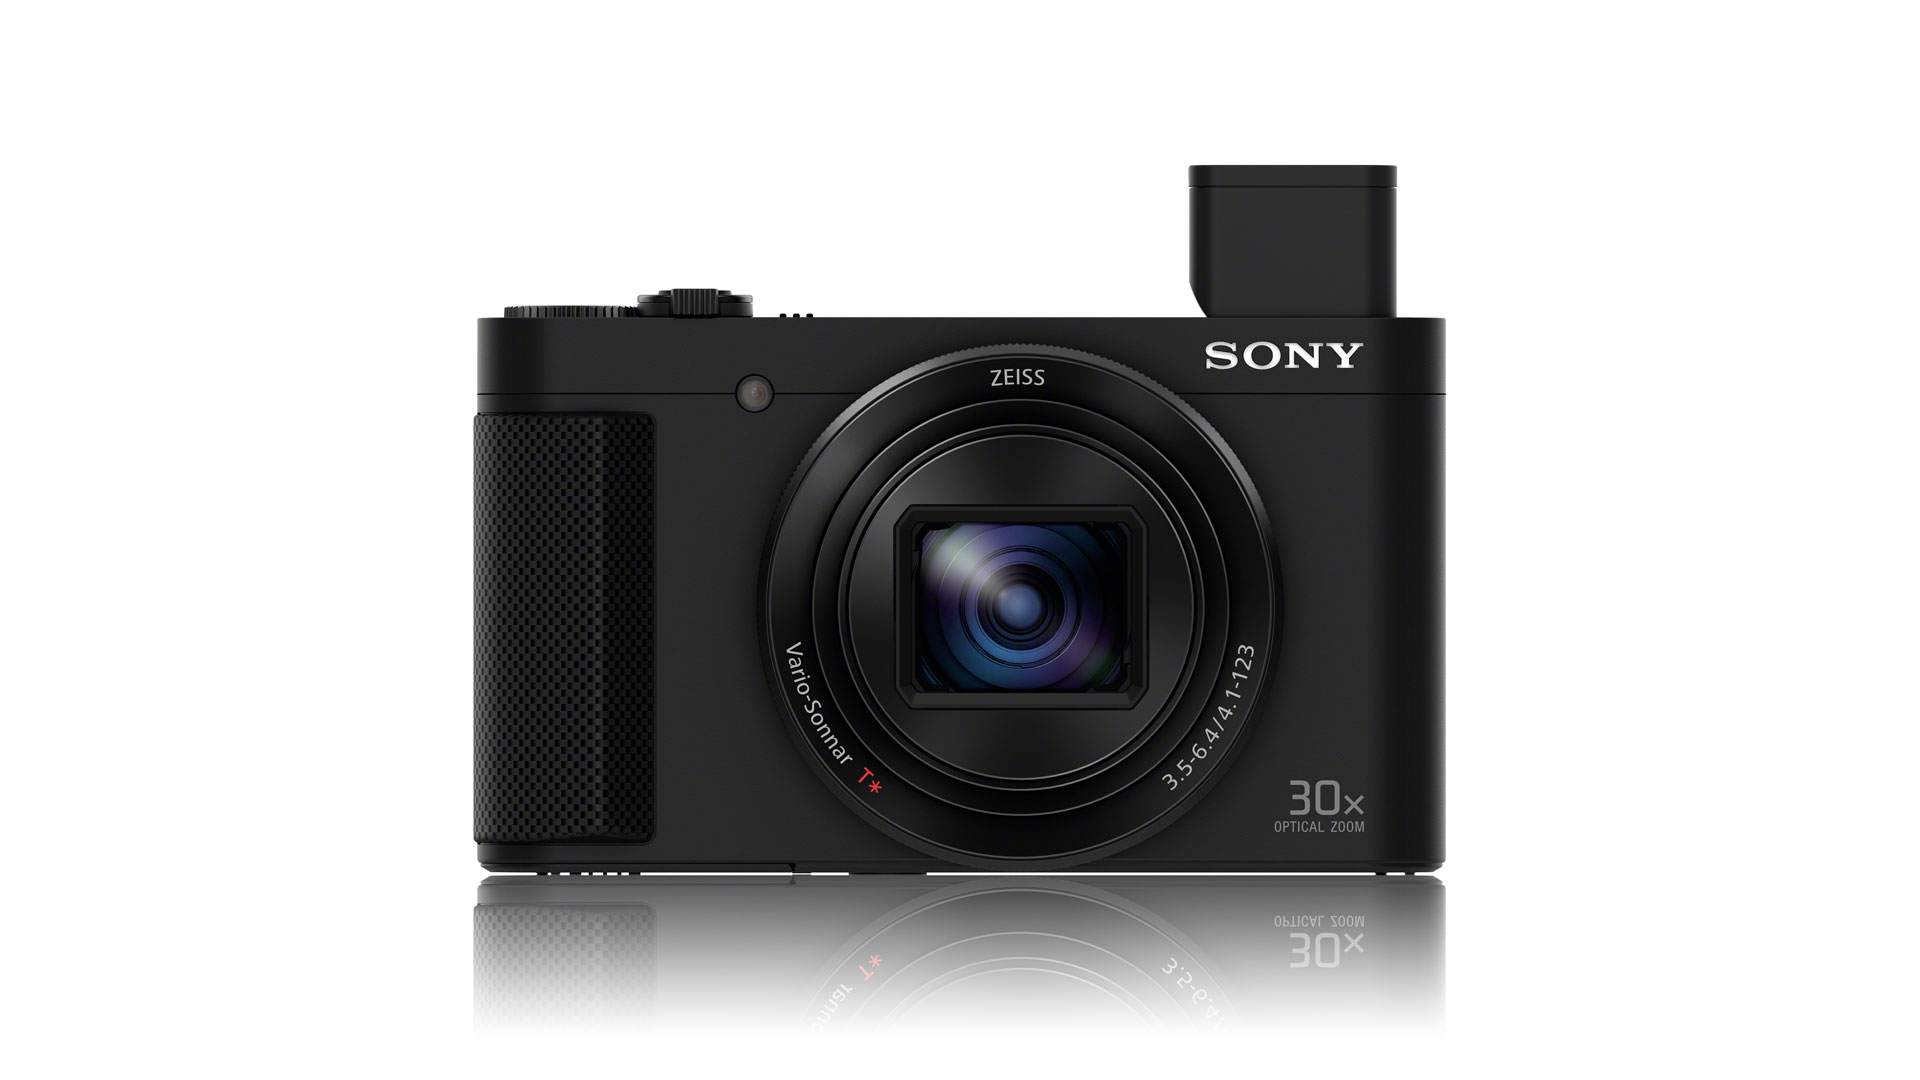 Sony Cyber-shot DSC-HX90V Review